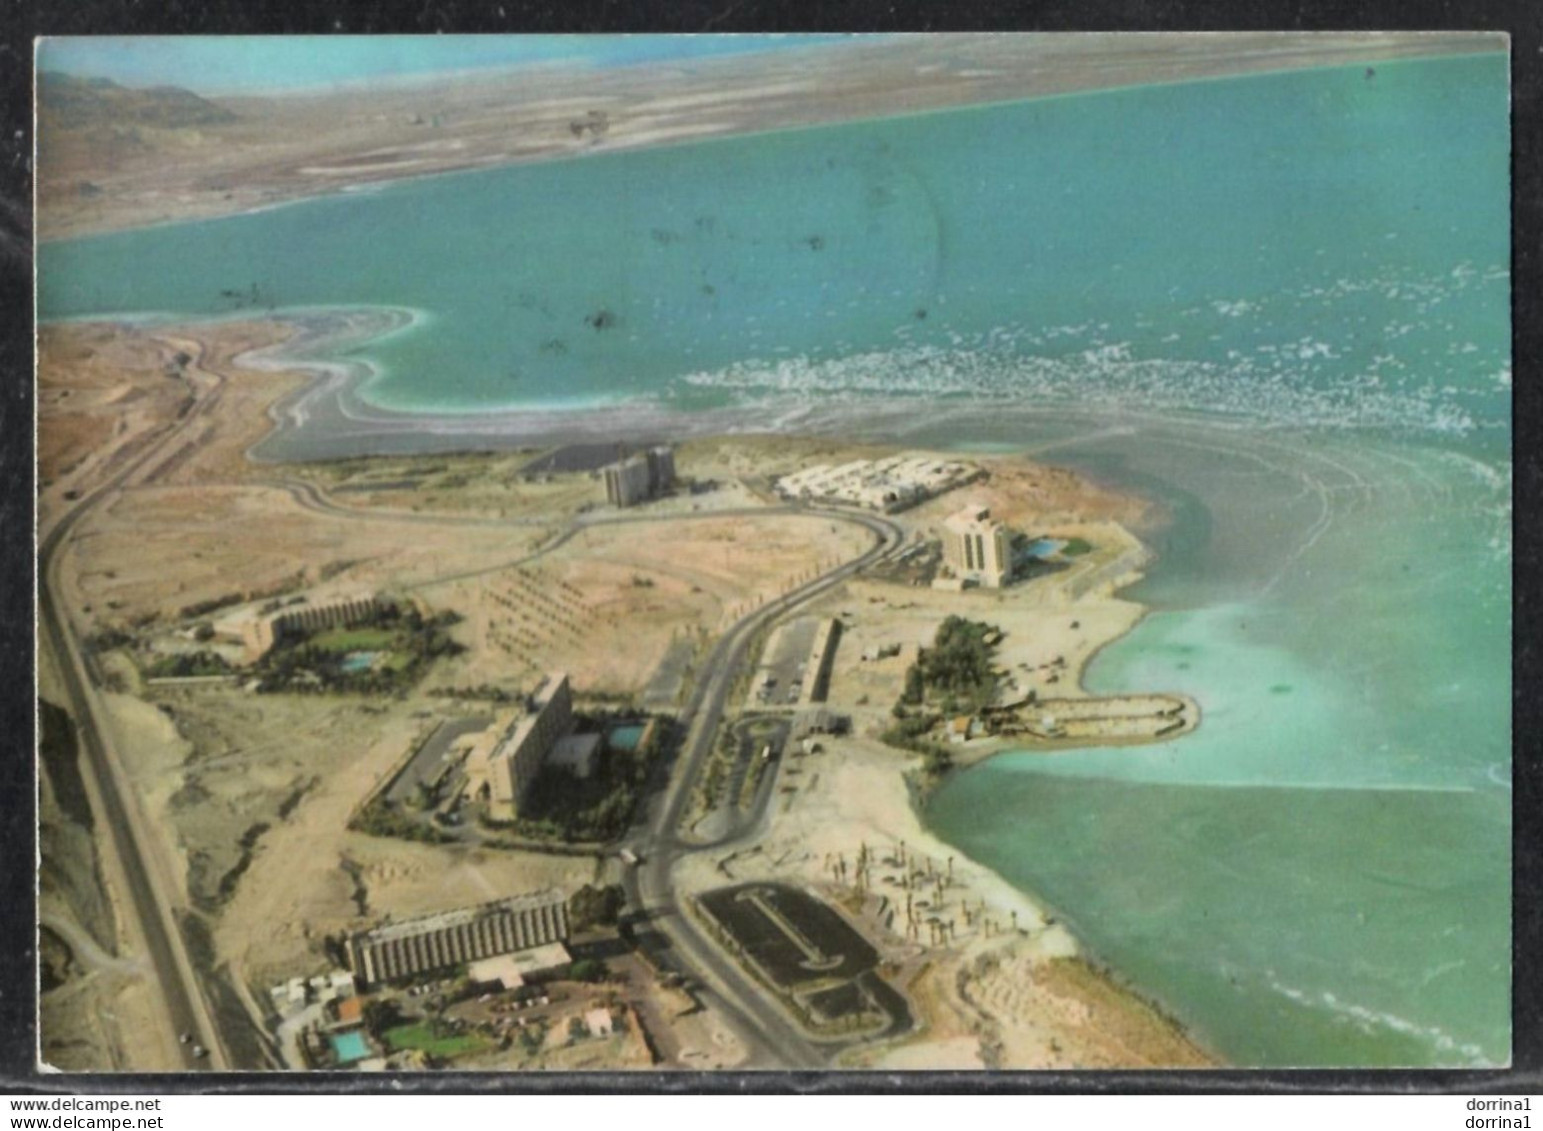 Ein Bokek The Dead Sea - Israel Postcard - Judaisme